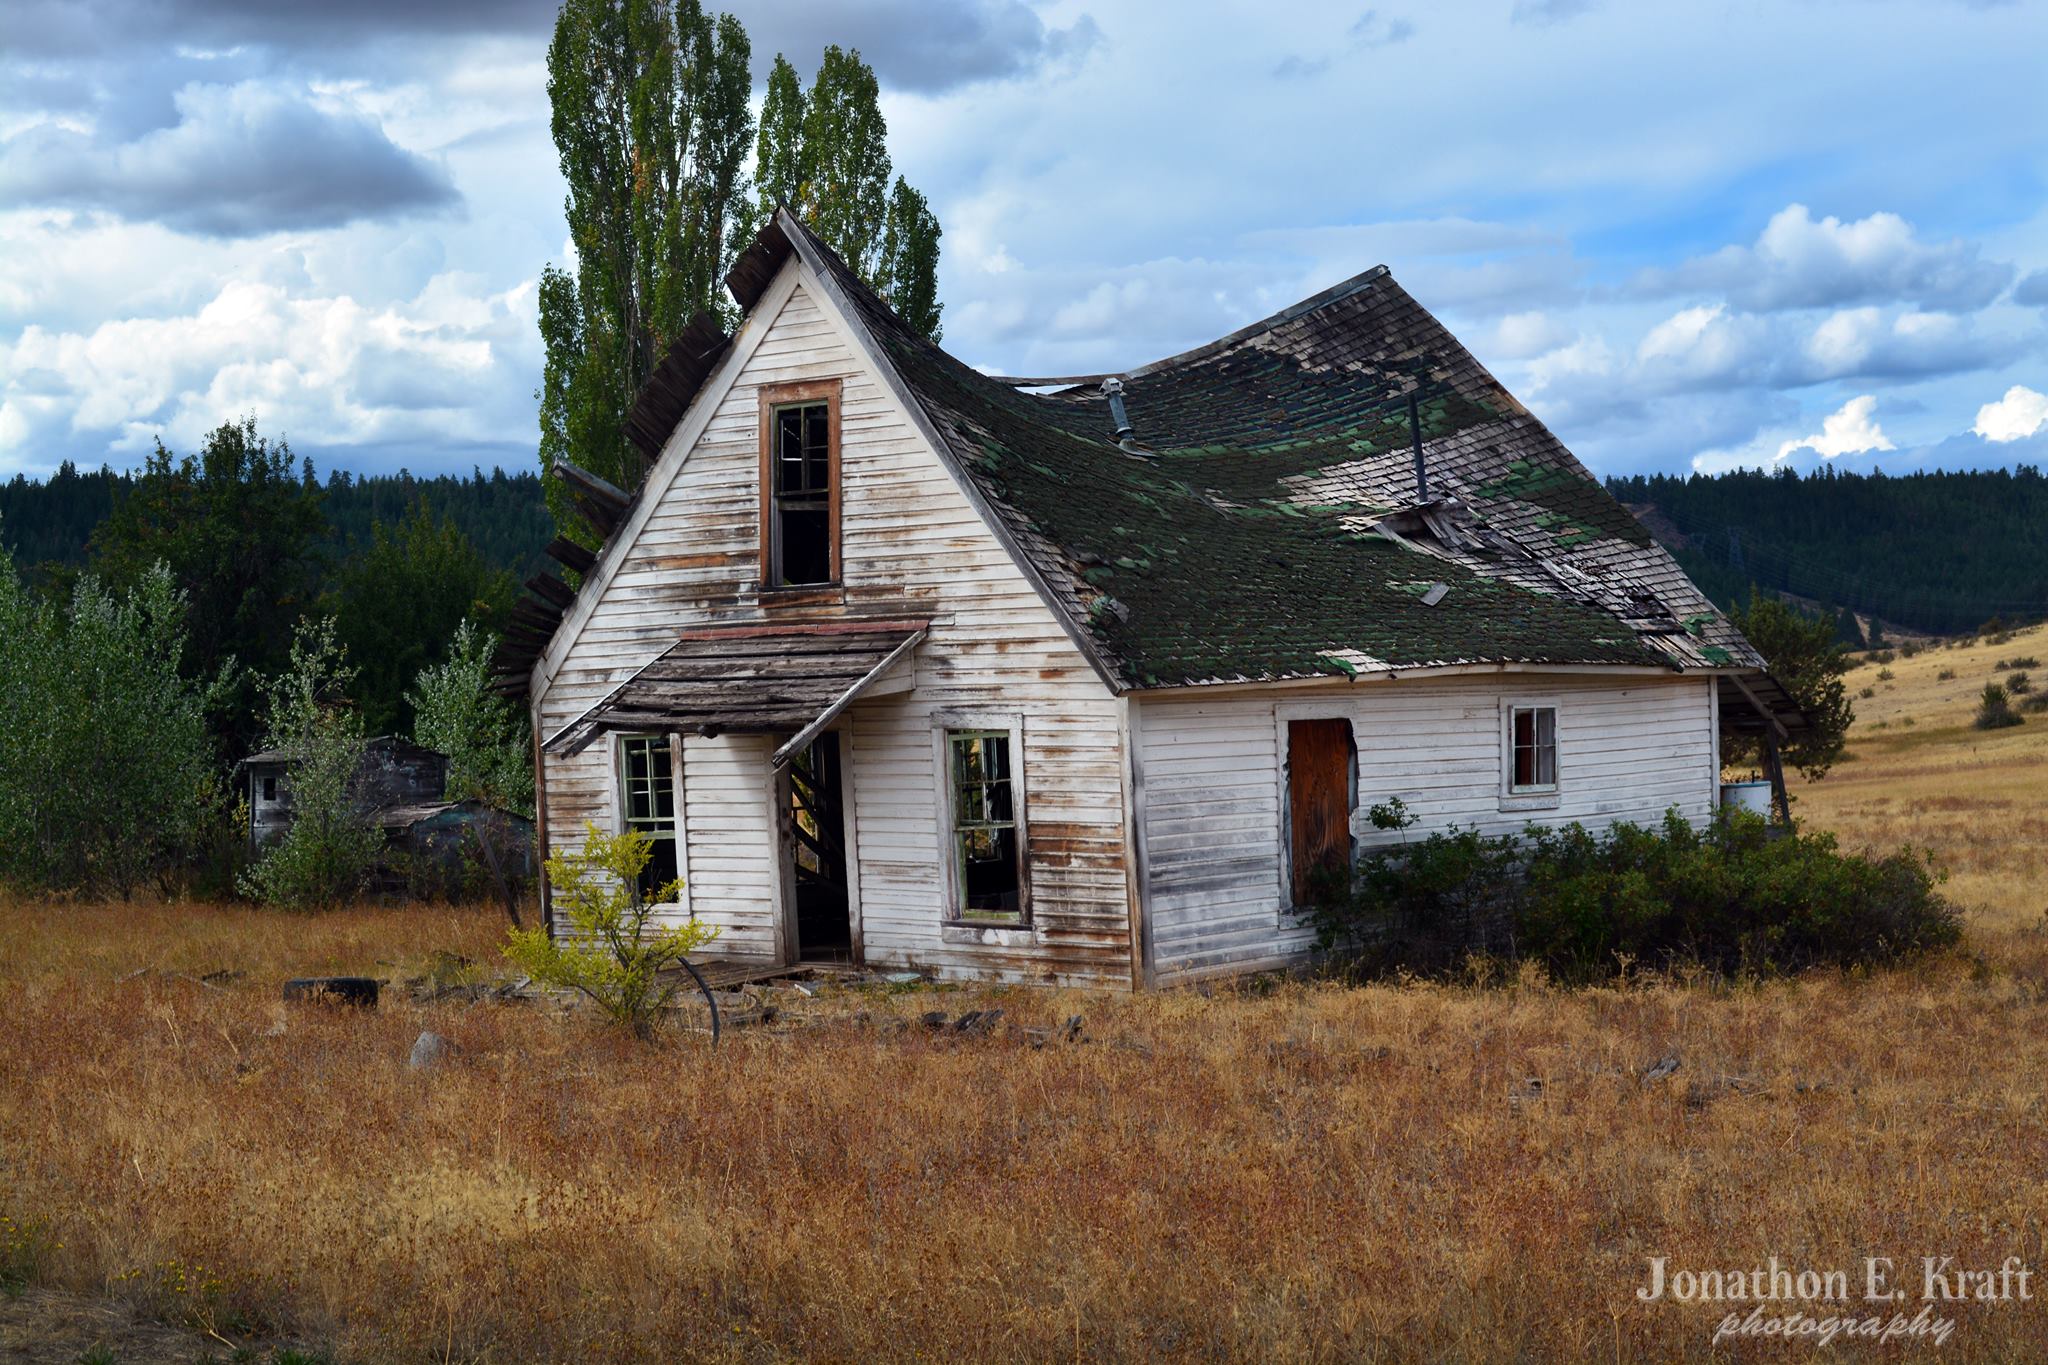 Jon Kraft / Abandoned Oregon